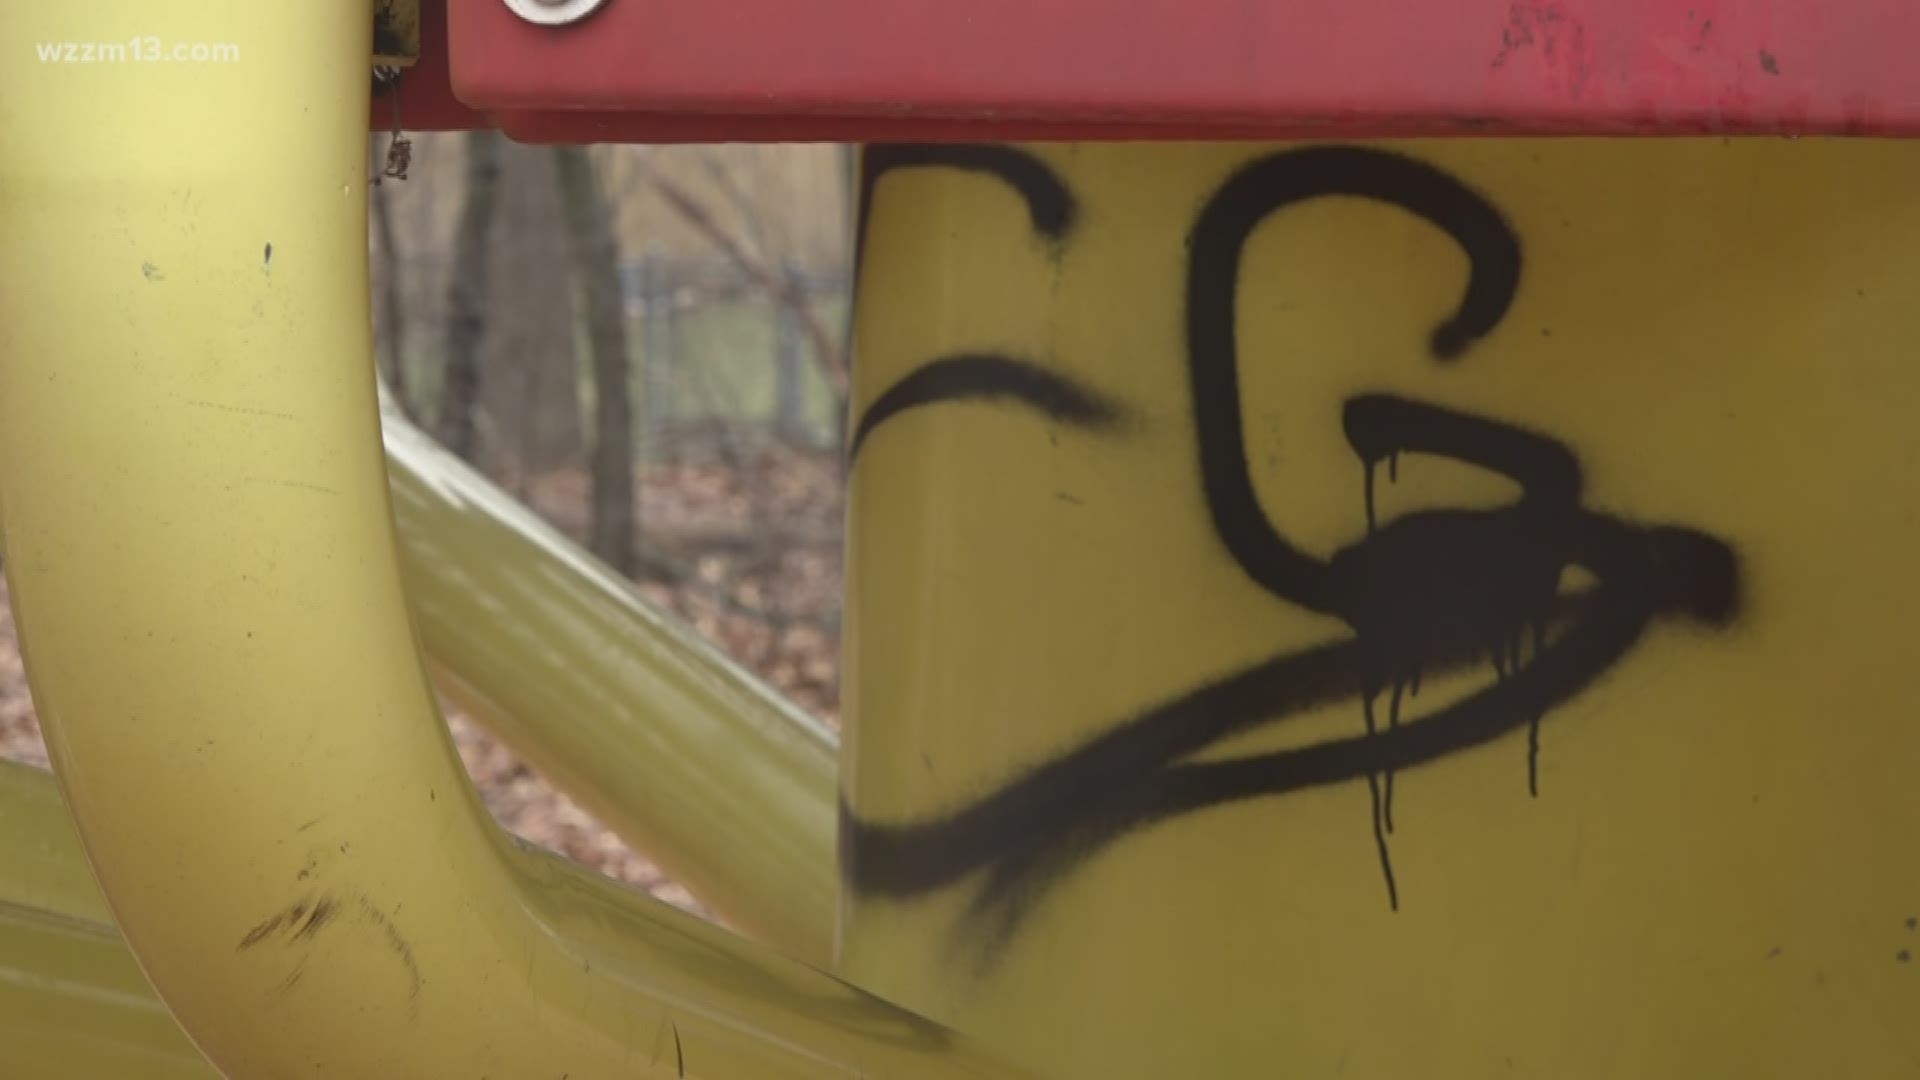 Walker park vandalized with graffiti